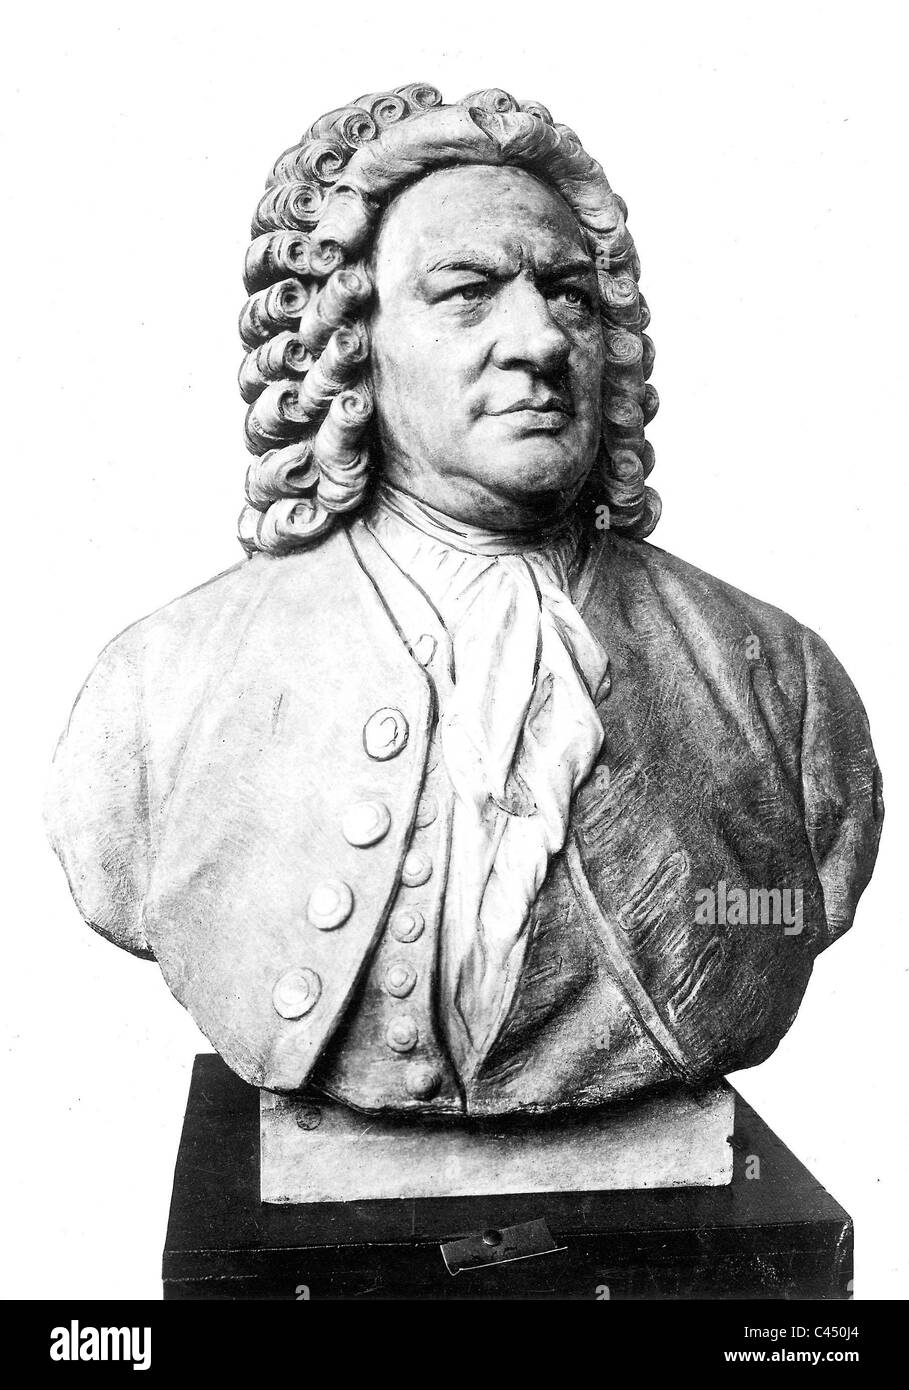 Johann Sebastian Bach Stockfotografie - Alamy